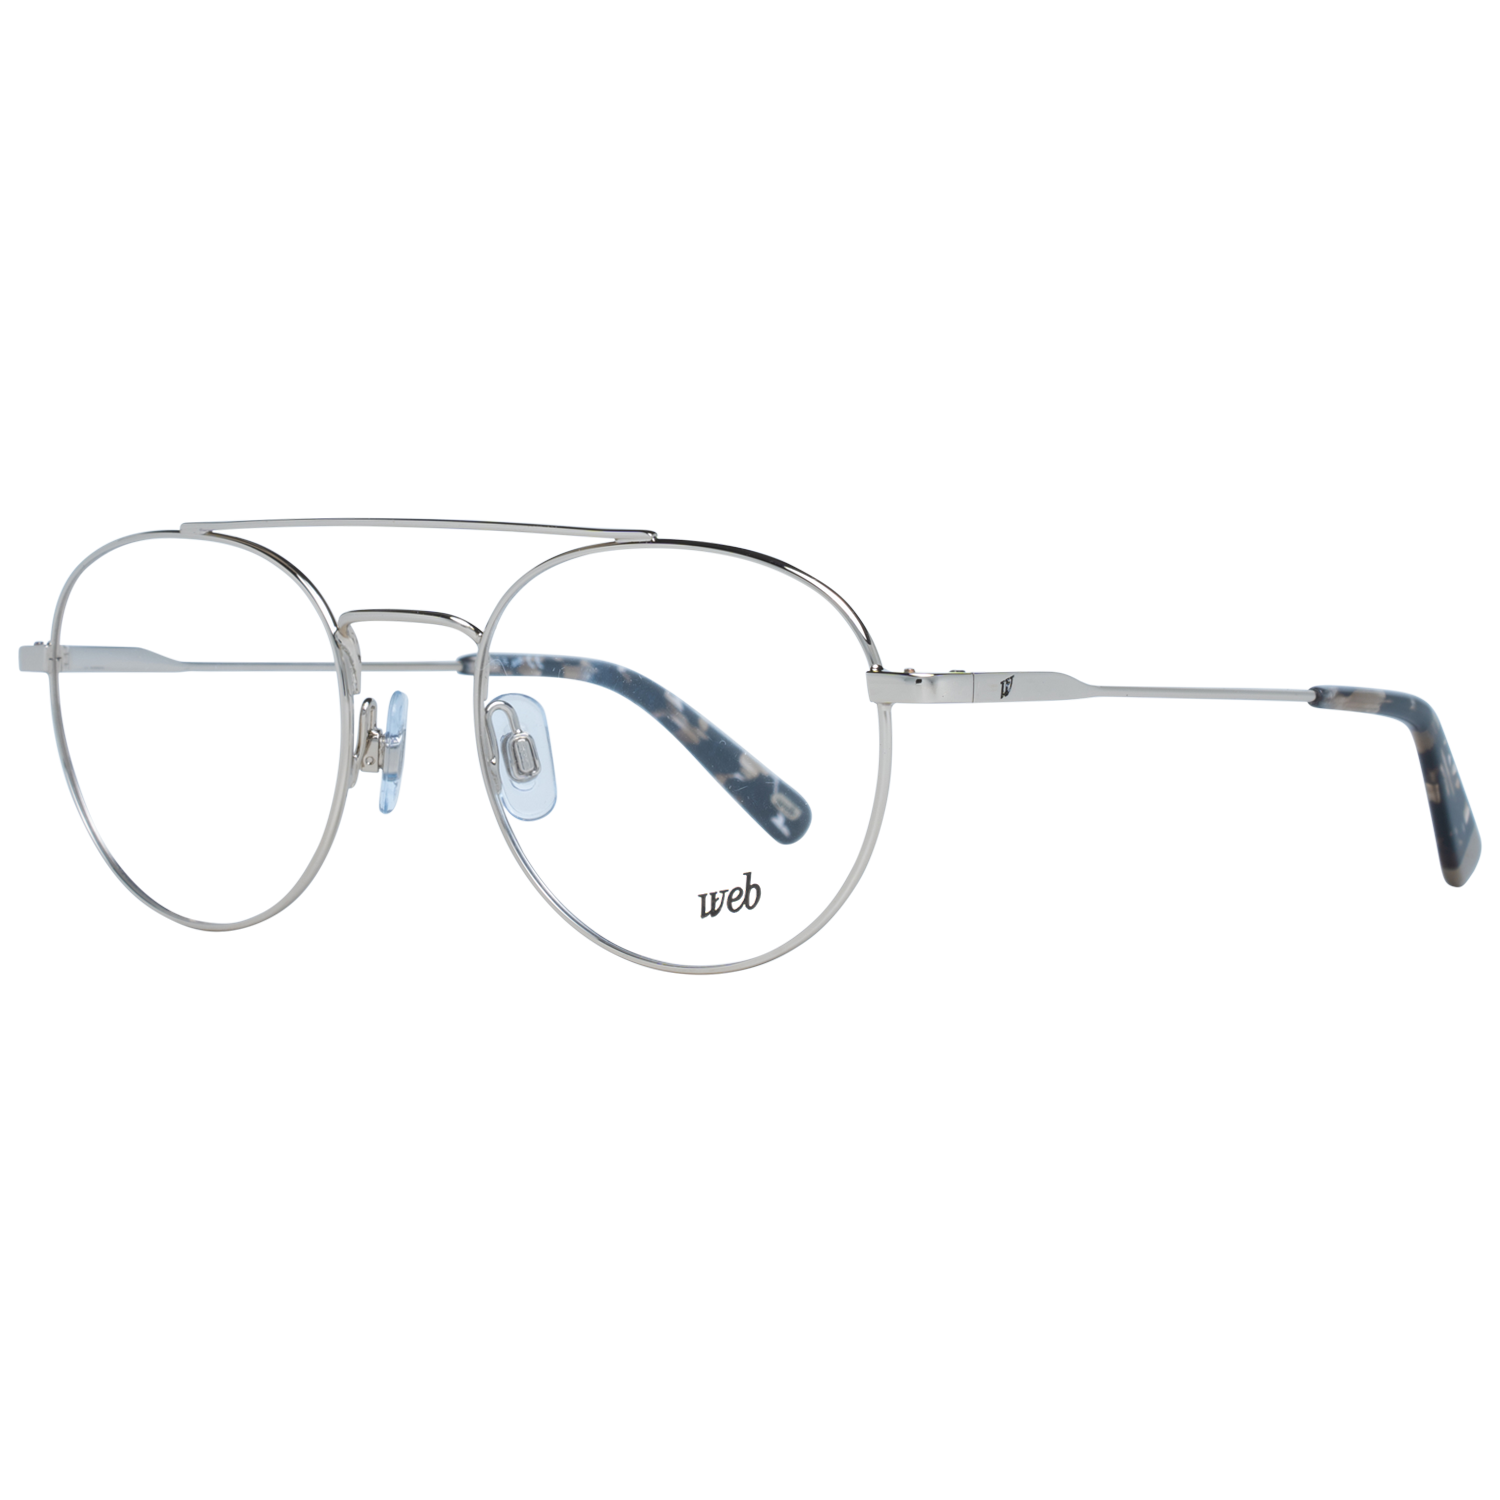 Web Frames Web Prescription Glasses Optical Frame WE5271 016 51 Eyeglasses Eyewear UK USA Australia 